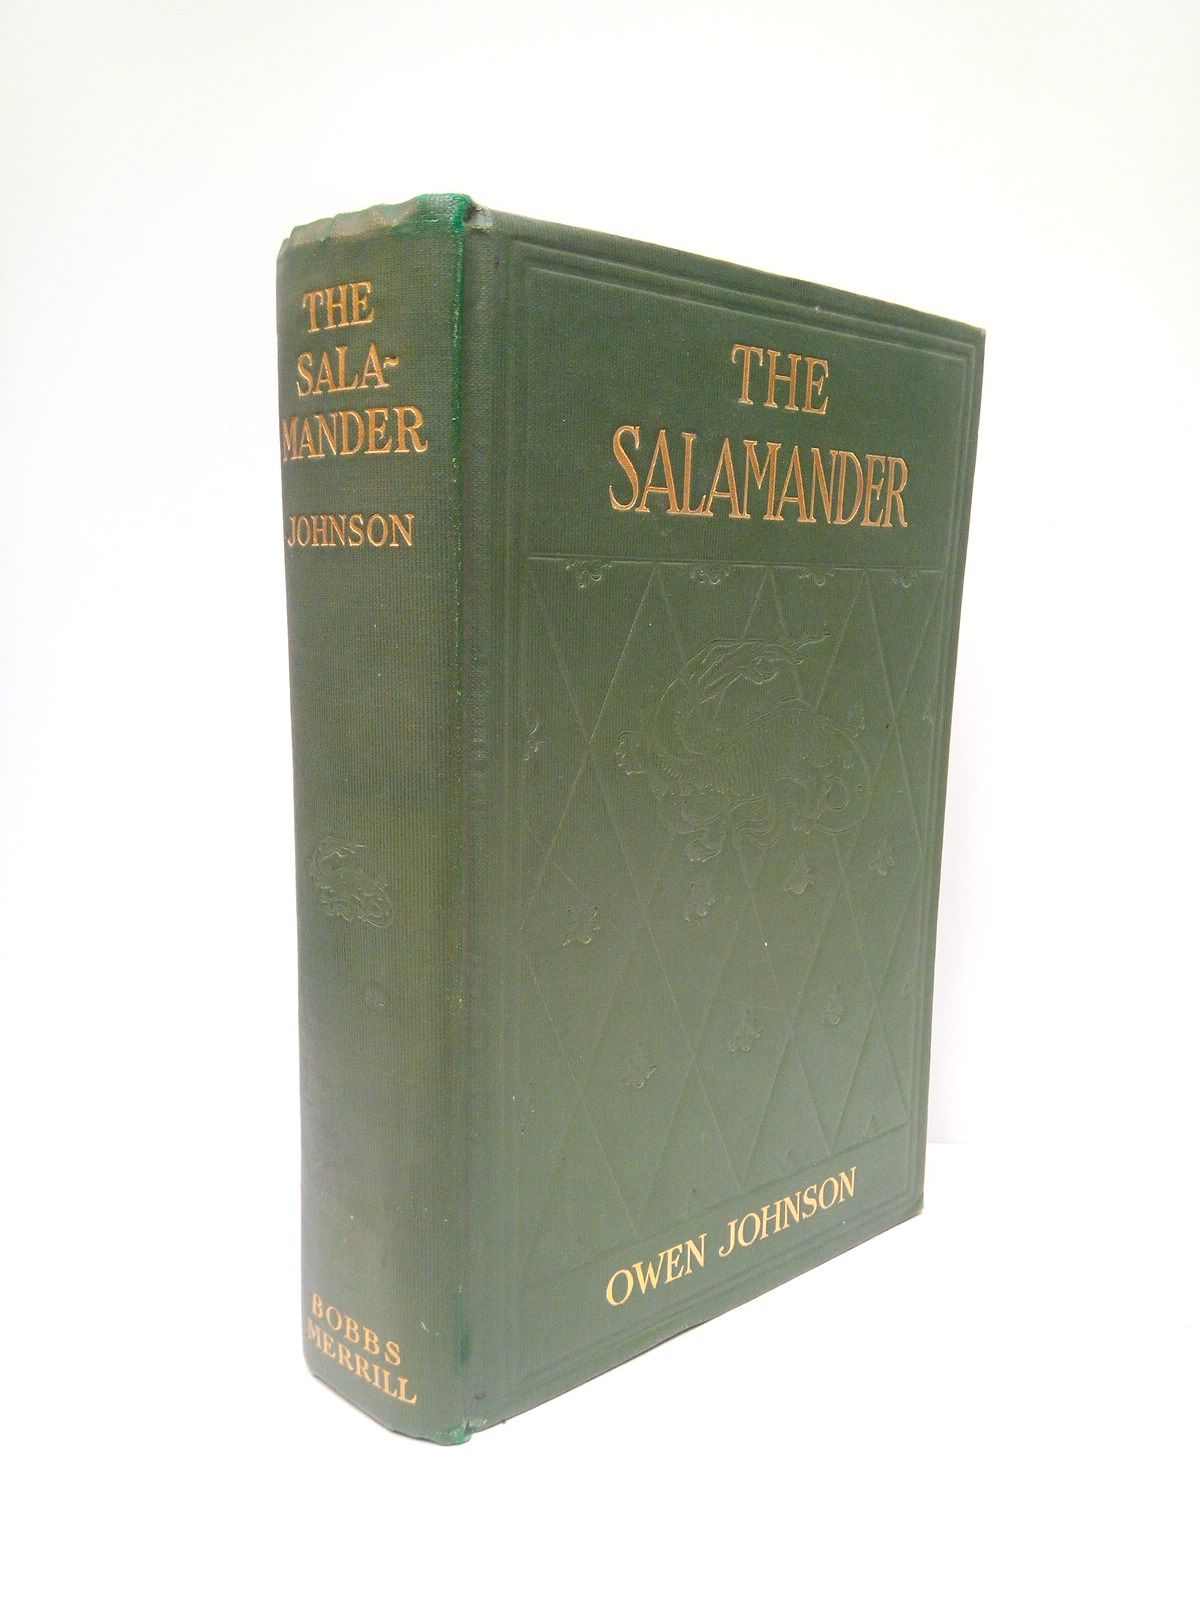 JOHNSON, Owen - The Salamander /  With illustrations by Everett Shinn